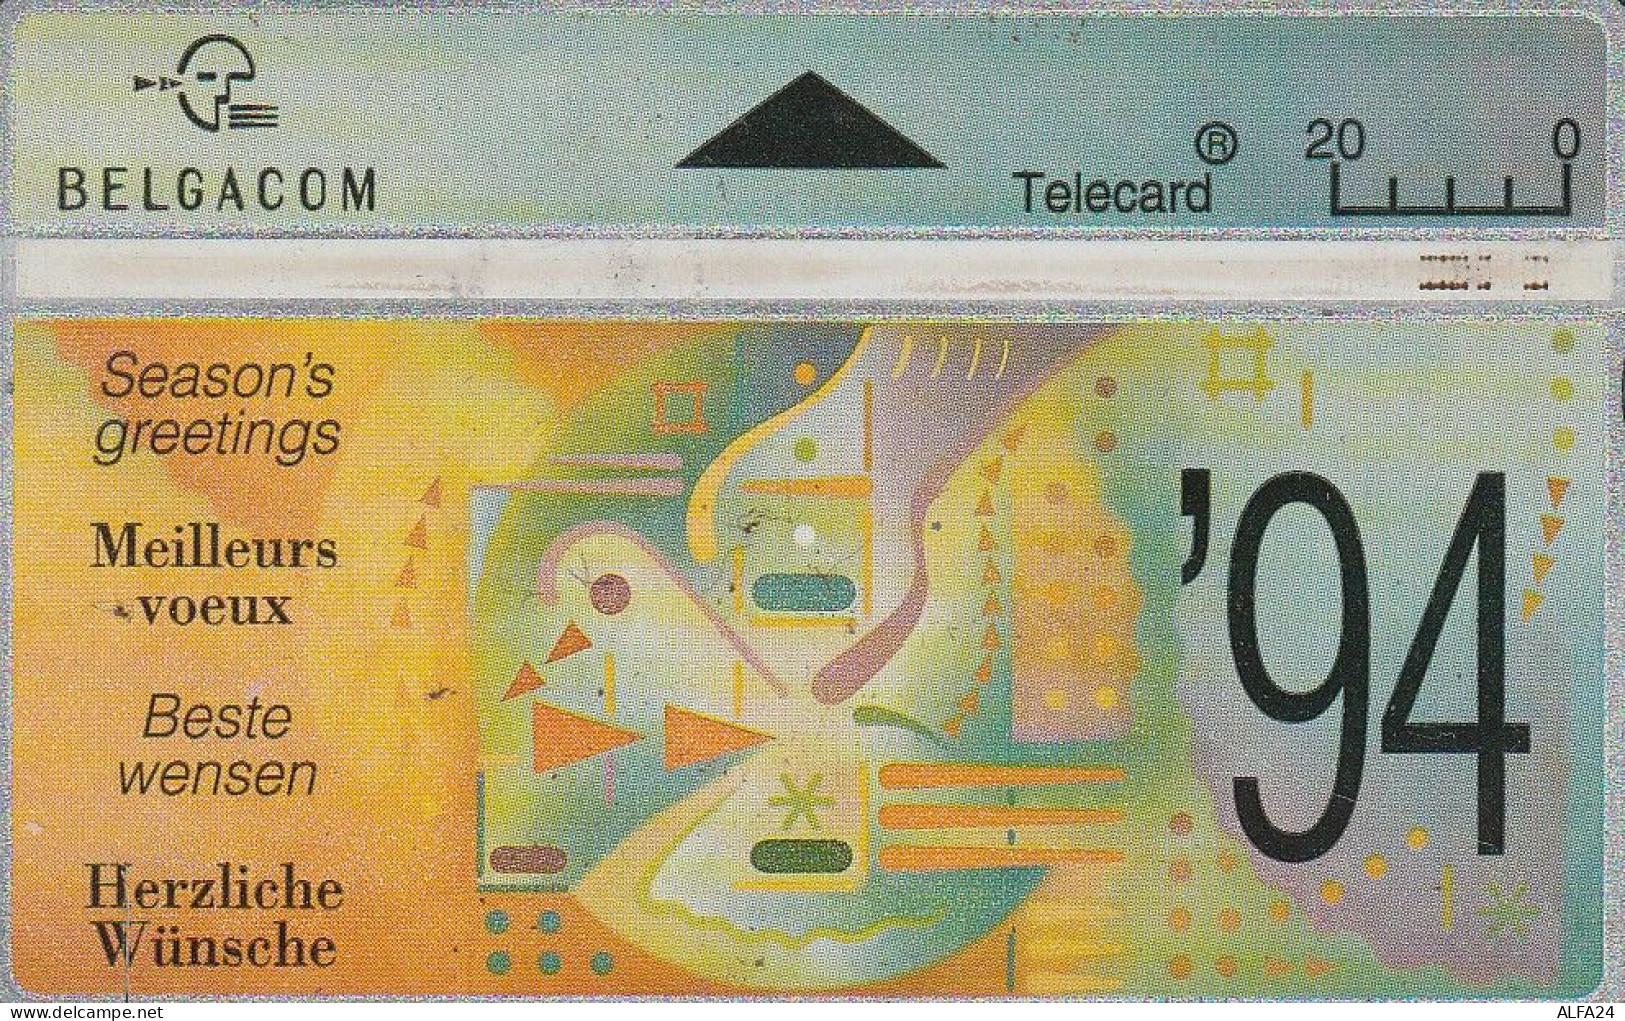 PHONE CARD BELGIO LG (CV6662 - Senza Chip